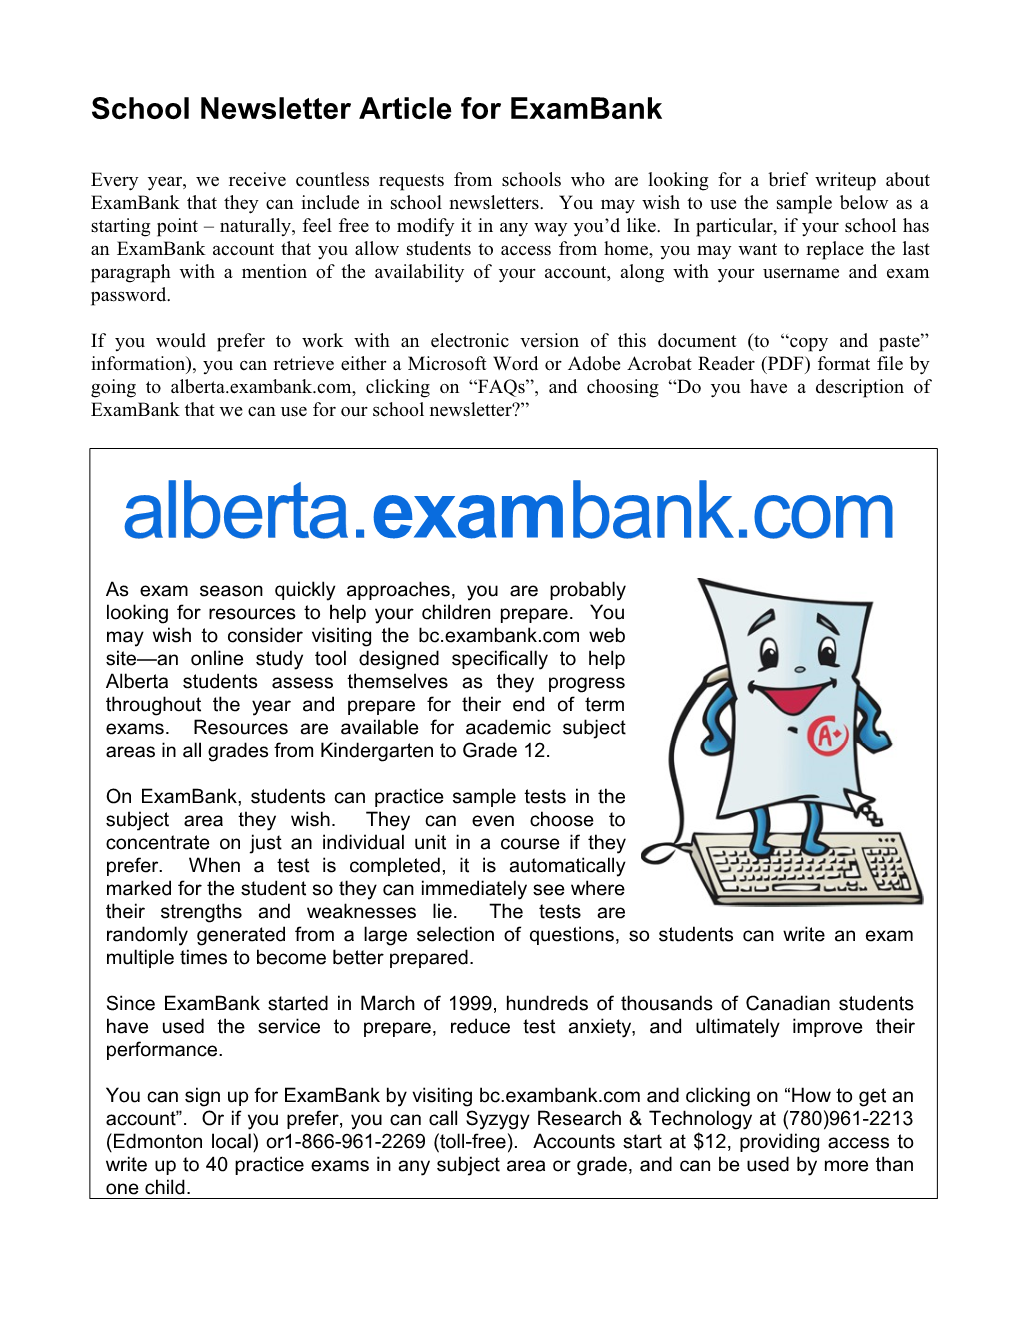 Example School Newsletter Article